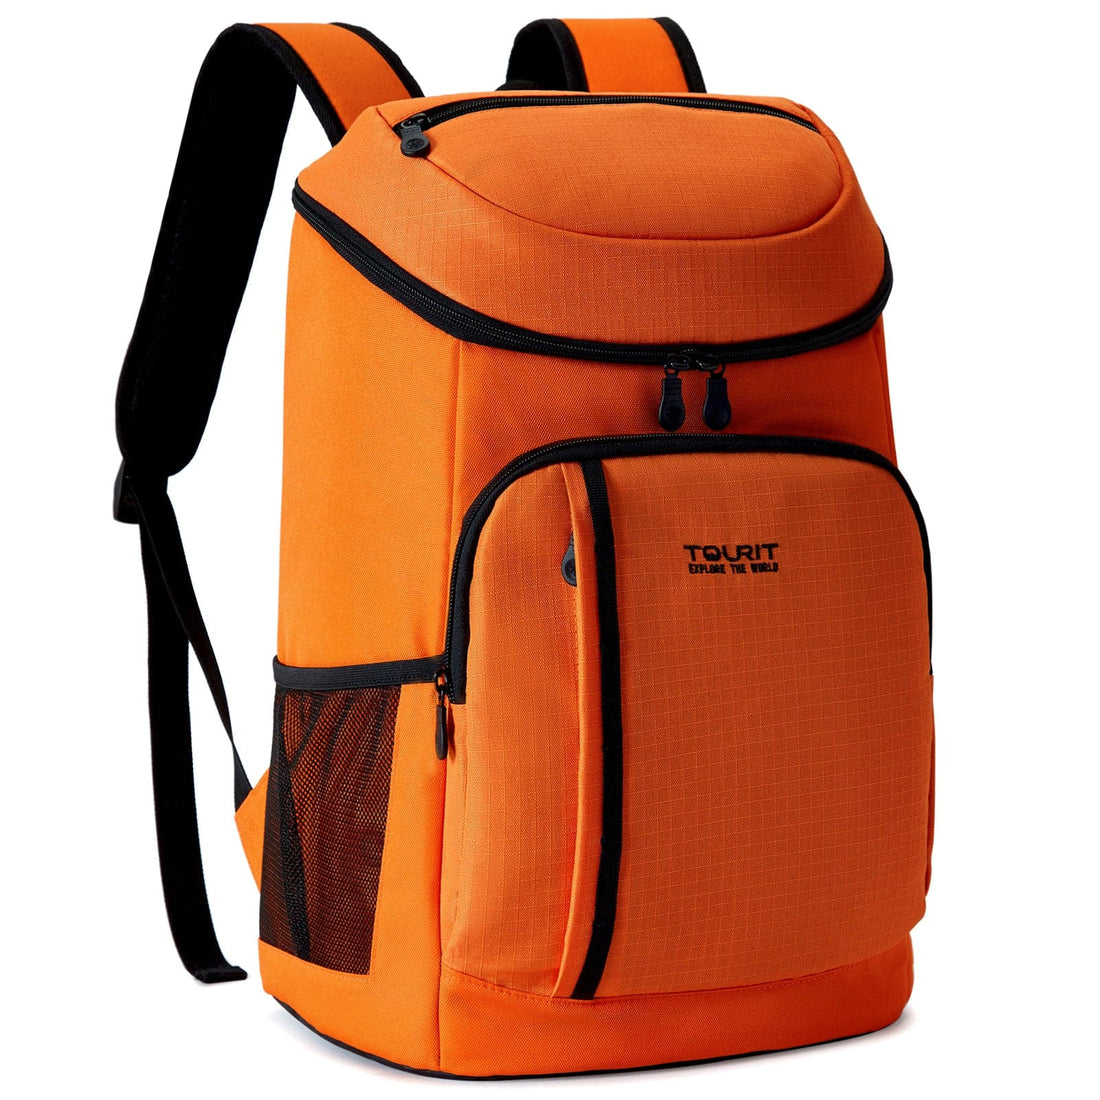 TOURIT 30 Cans Cooler Backpack Lightweight Insulated Backpack Cooler Leak-Proof, Black